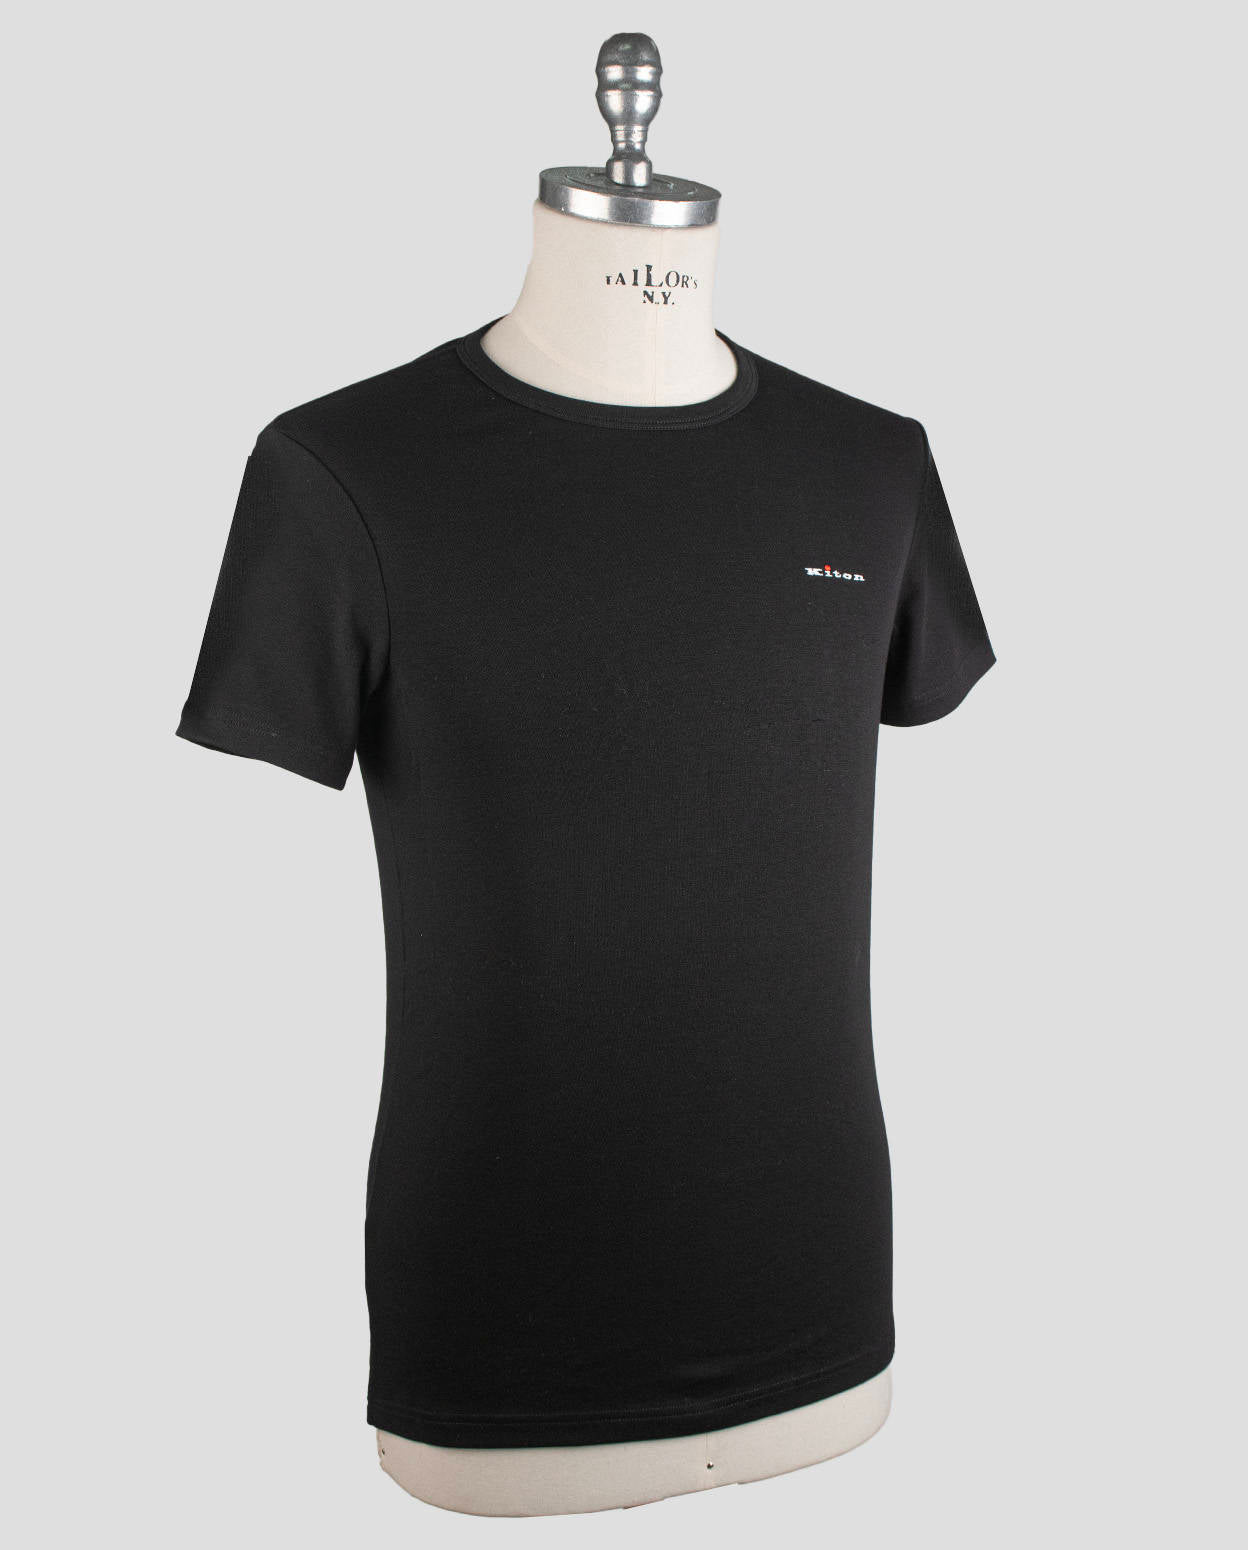 Kiton Black Cotton Ea T-Shirt Underwear